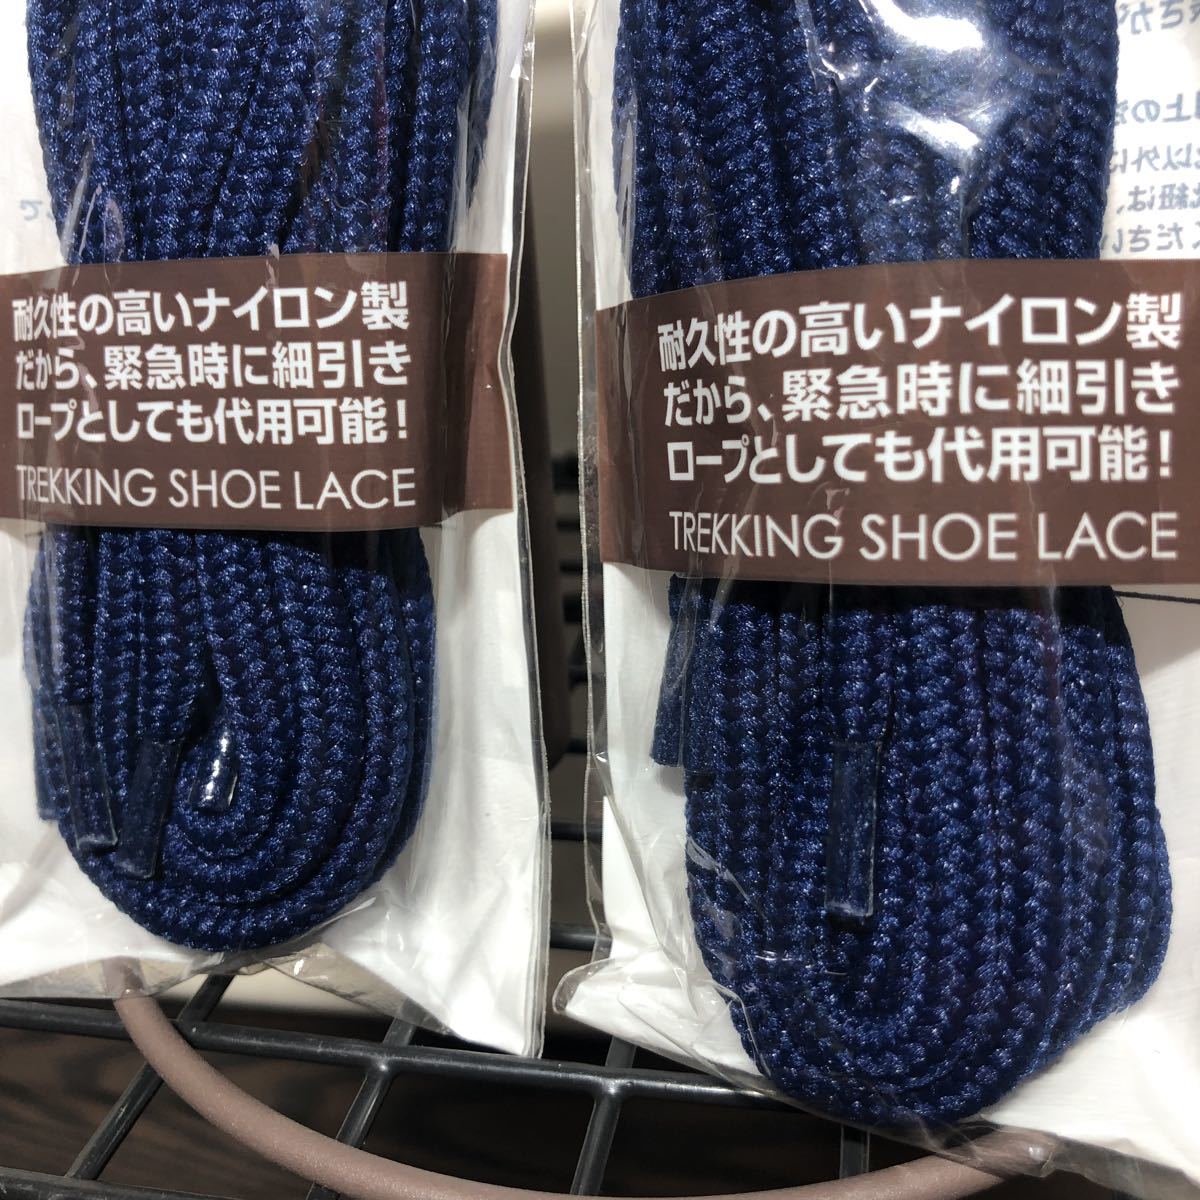  Cross приключения нейлон сделано в Японии треккинг колодка гонки futoshi круг шнур 160cm темно-синий 2 комплект 4шт.@ обувь шнур альпинизм обувь ботинки 